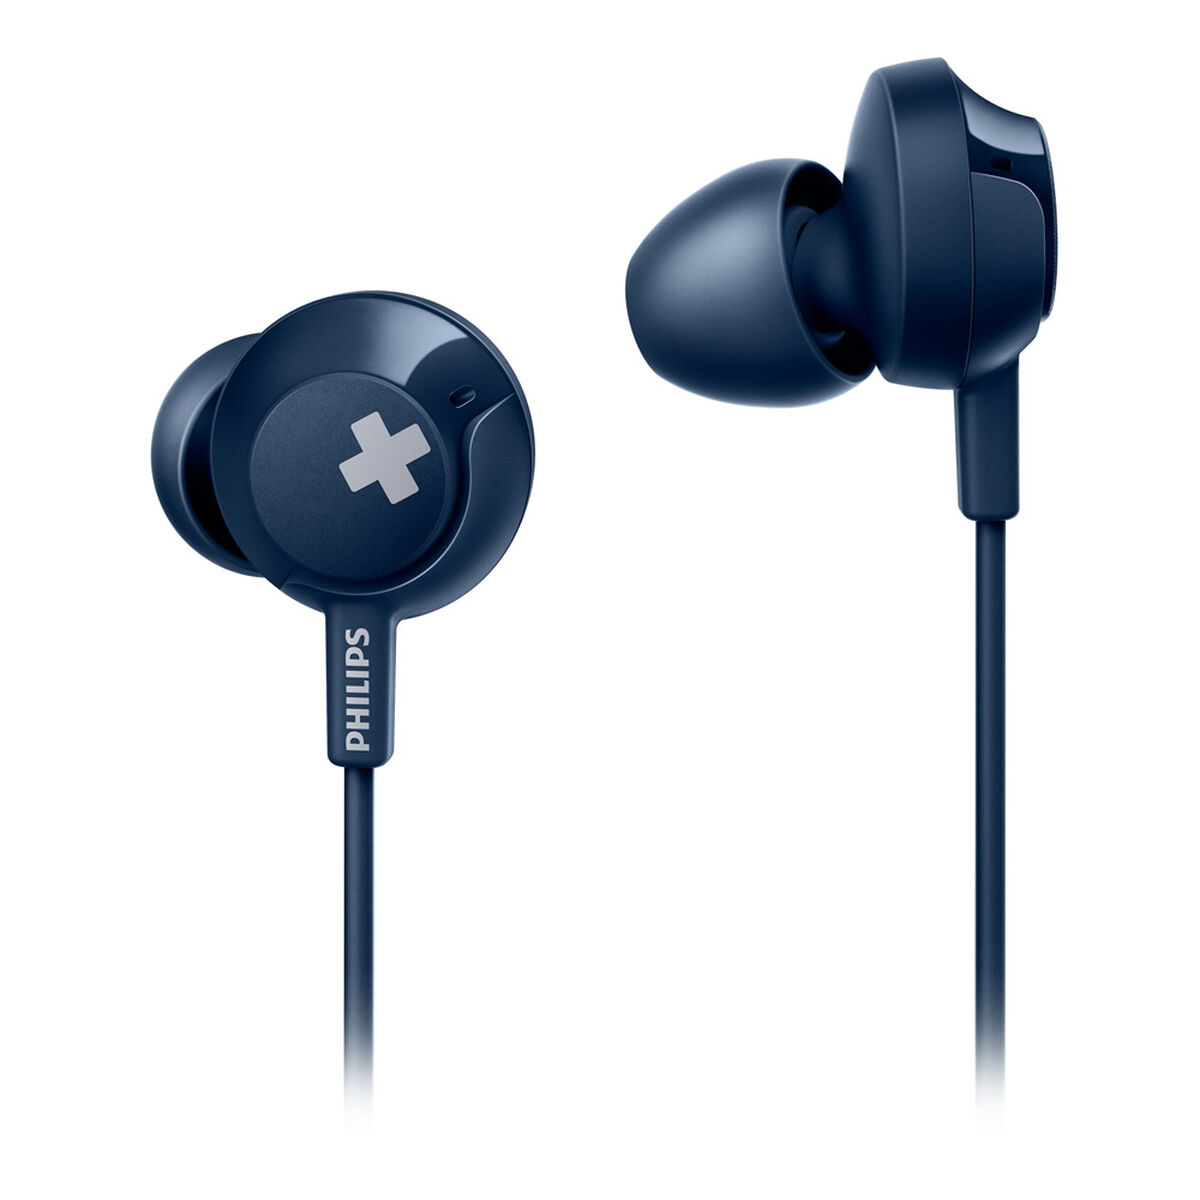 Audífonos In Ear Philips SHE4305 BASS+ Azules